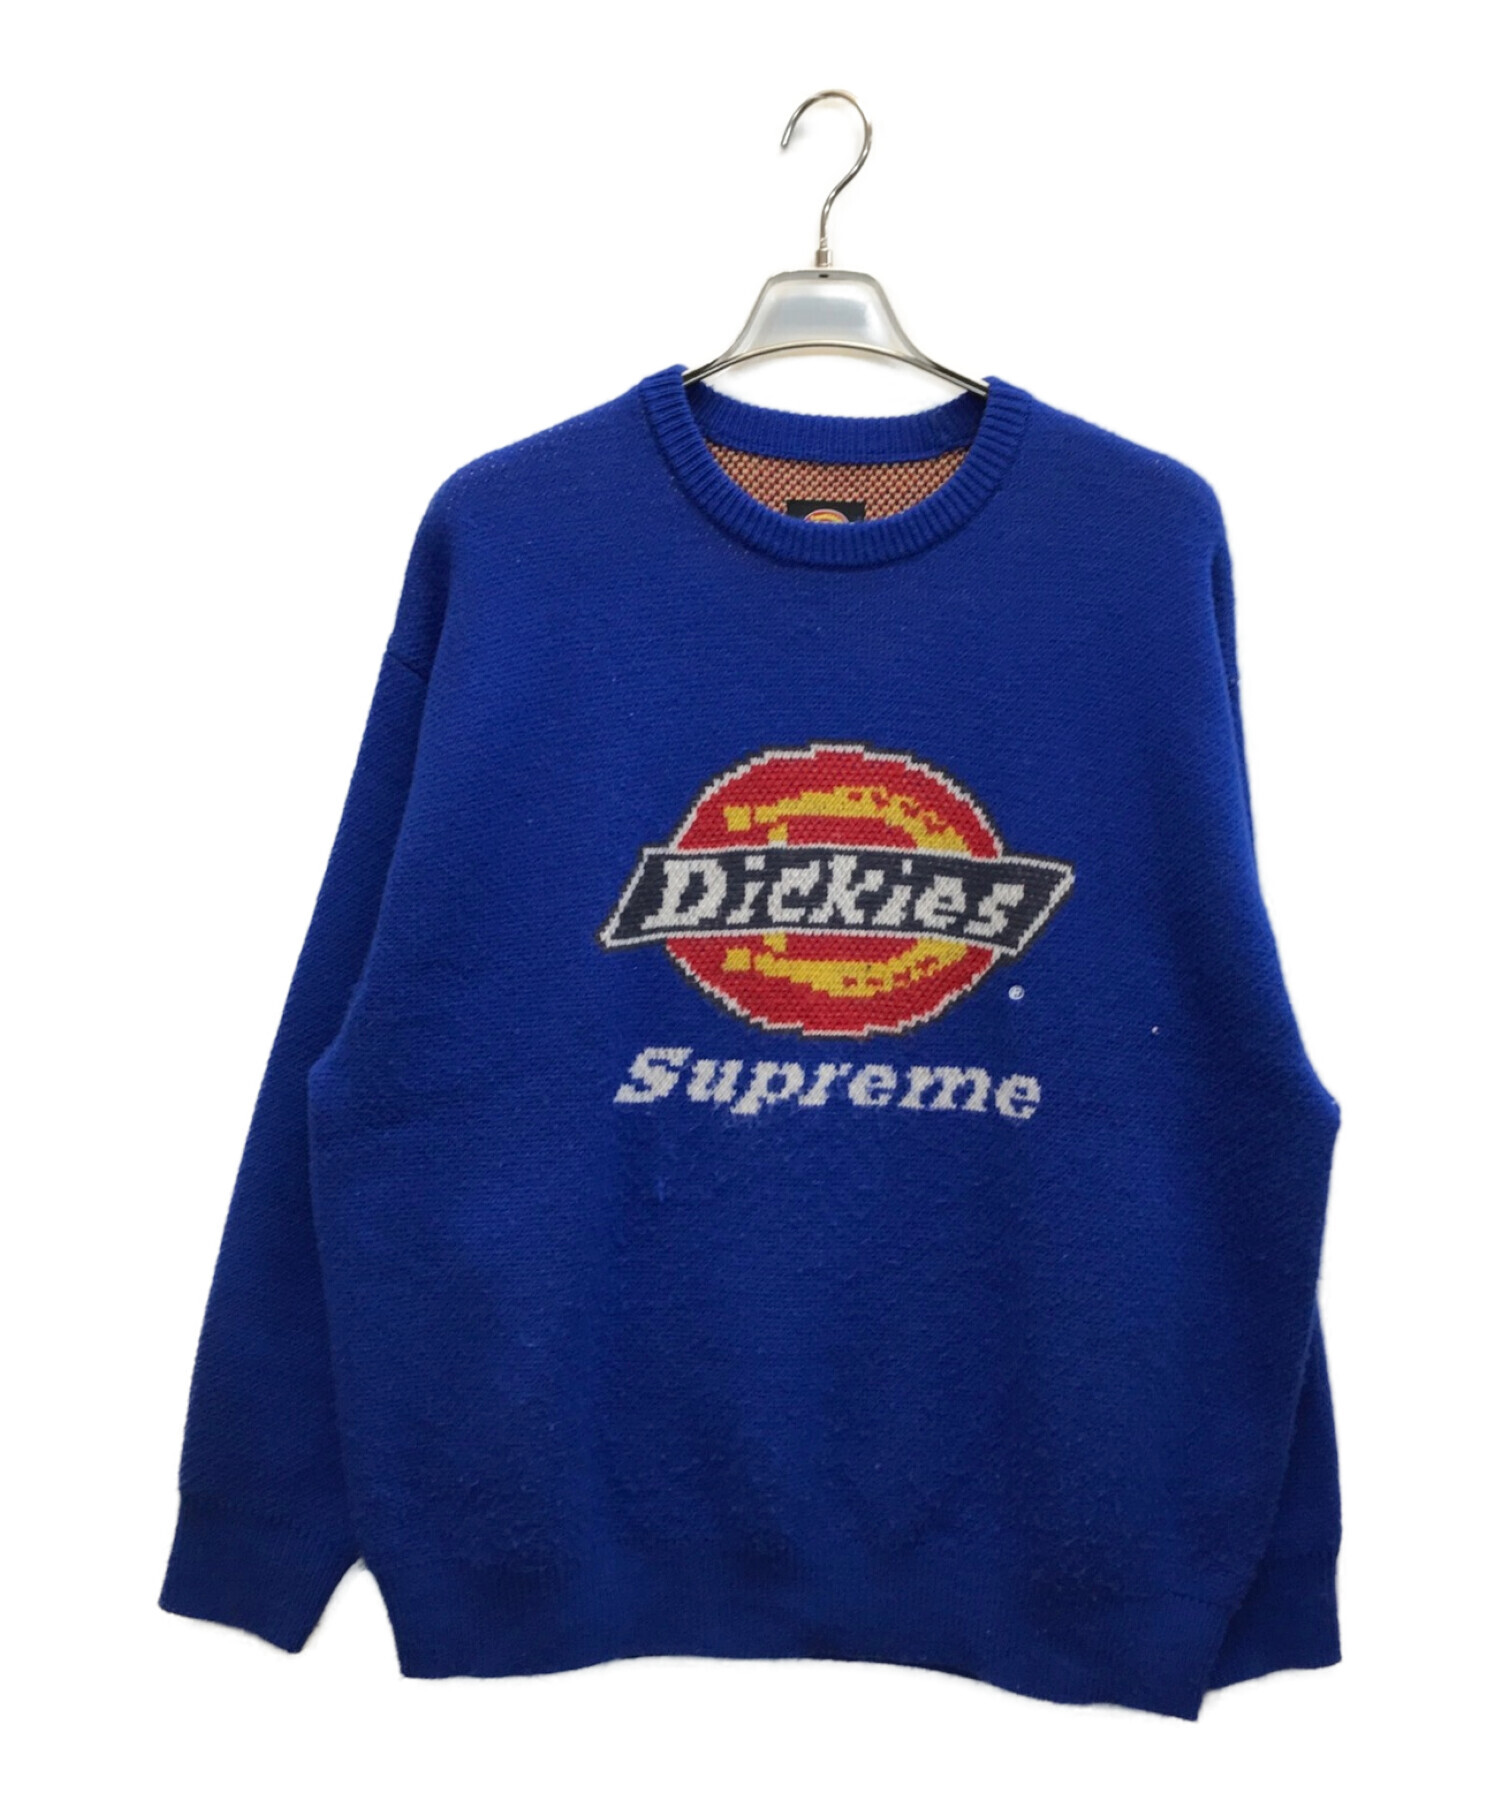 Supreme×Dickies (シュプリーム×ディッキーズ) 22AW Sweater コラボロゴニット ブルー サイズ:M